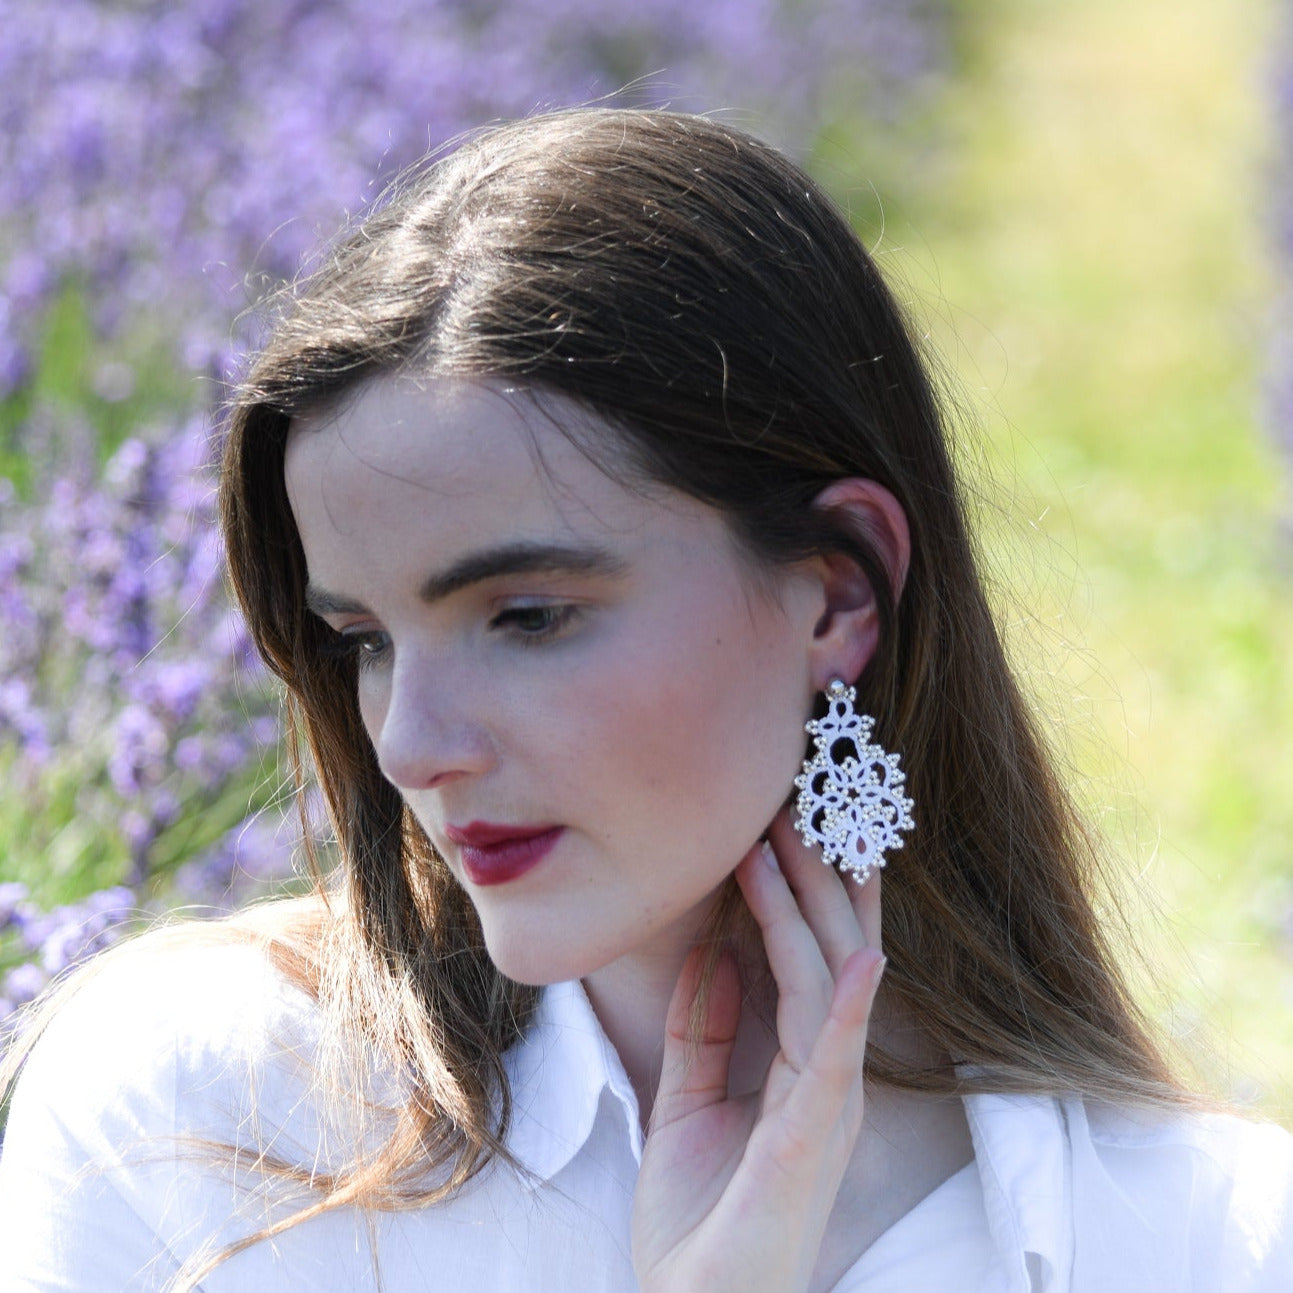 Melina lace earrings, silver